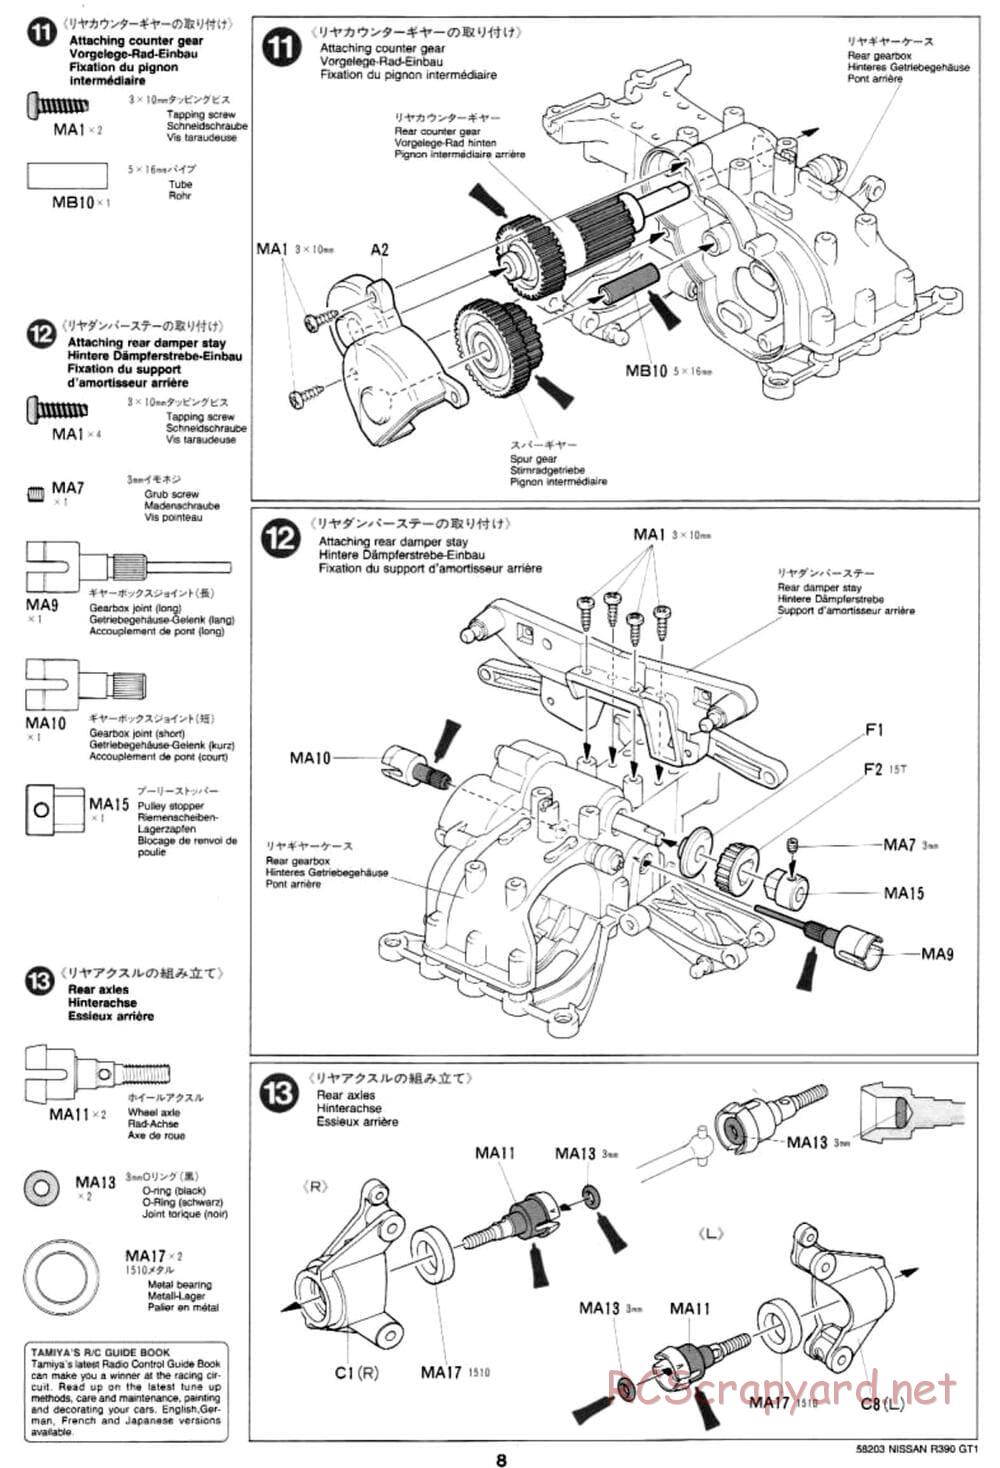 Tamiya - Nissan R390 GT1 - TA-03R Chassis - Manual - Page 8